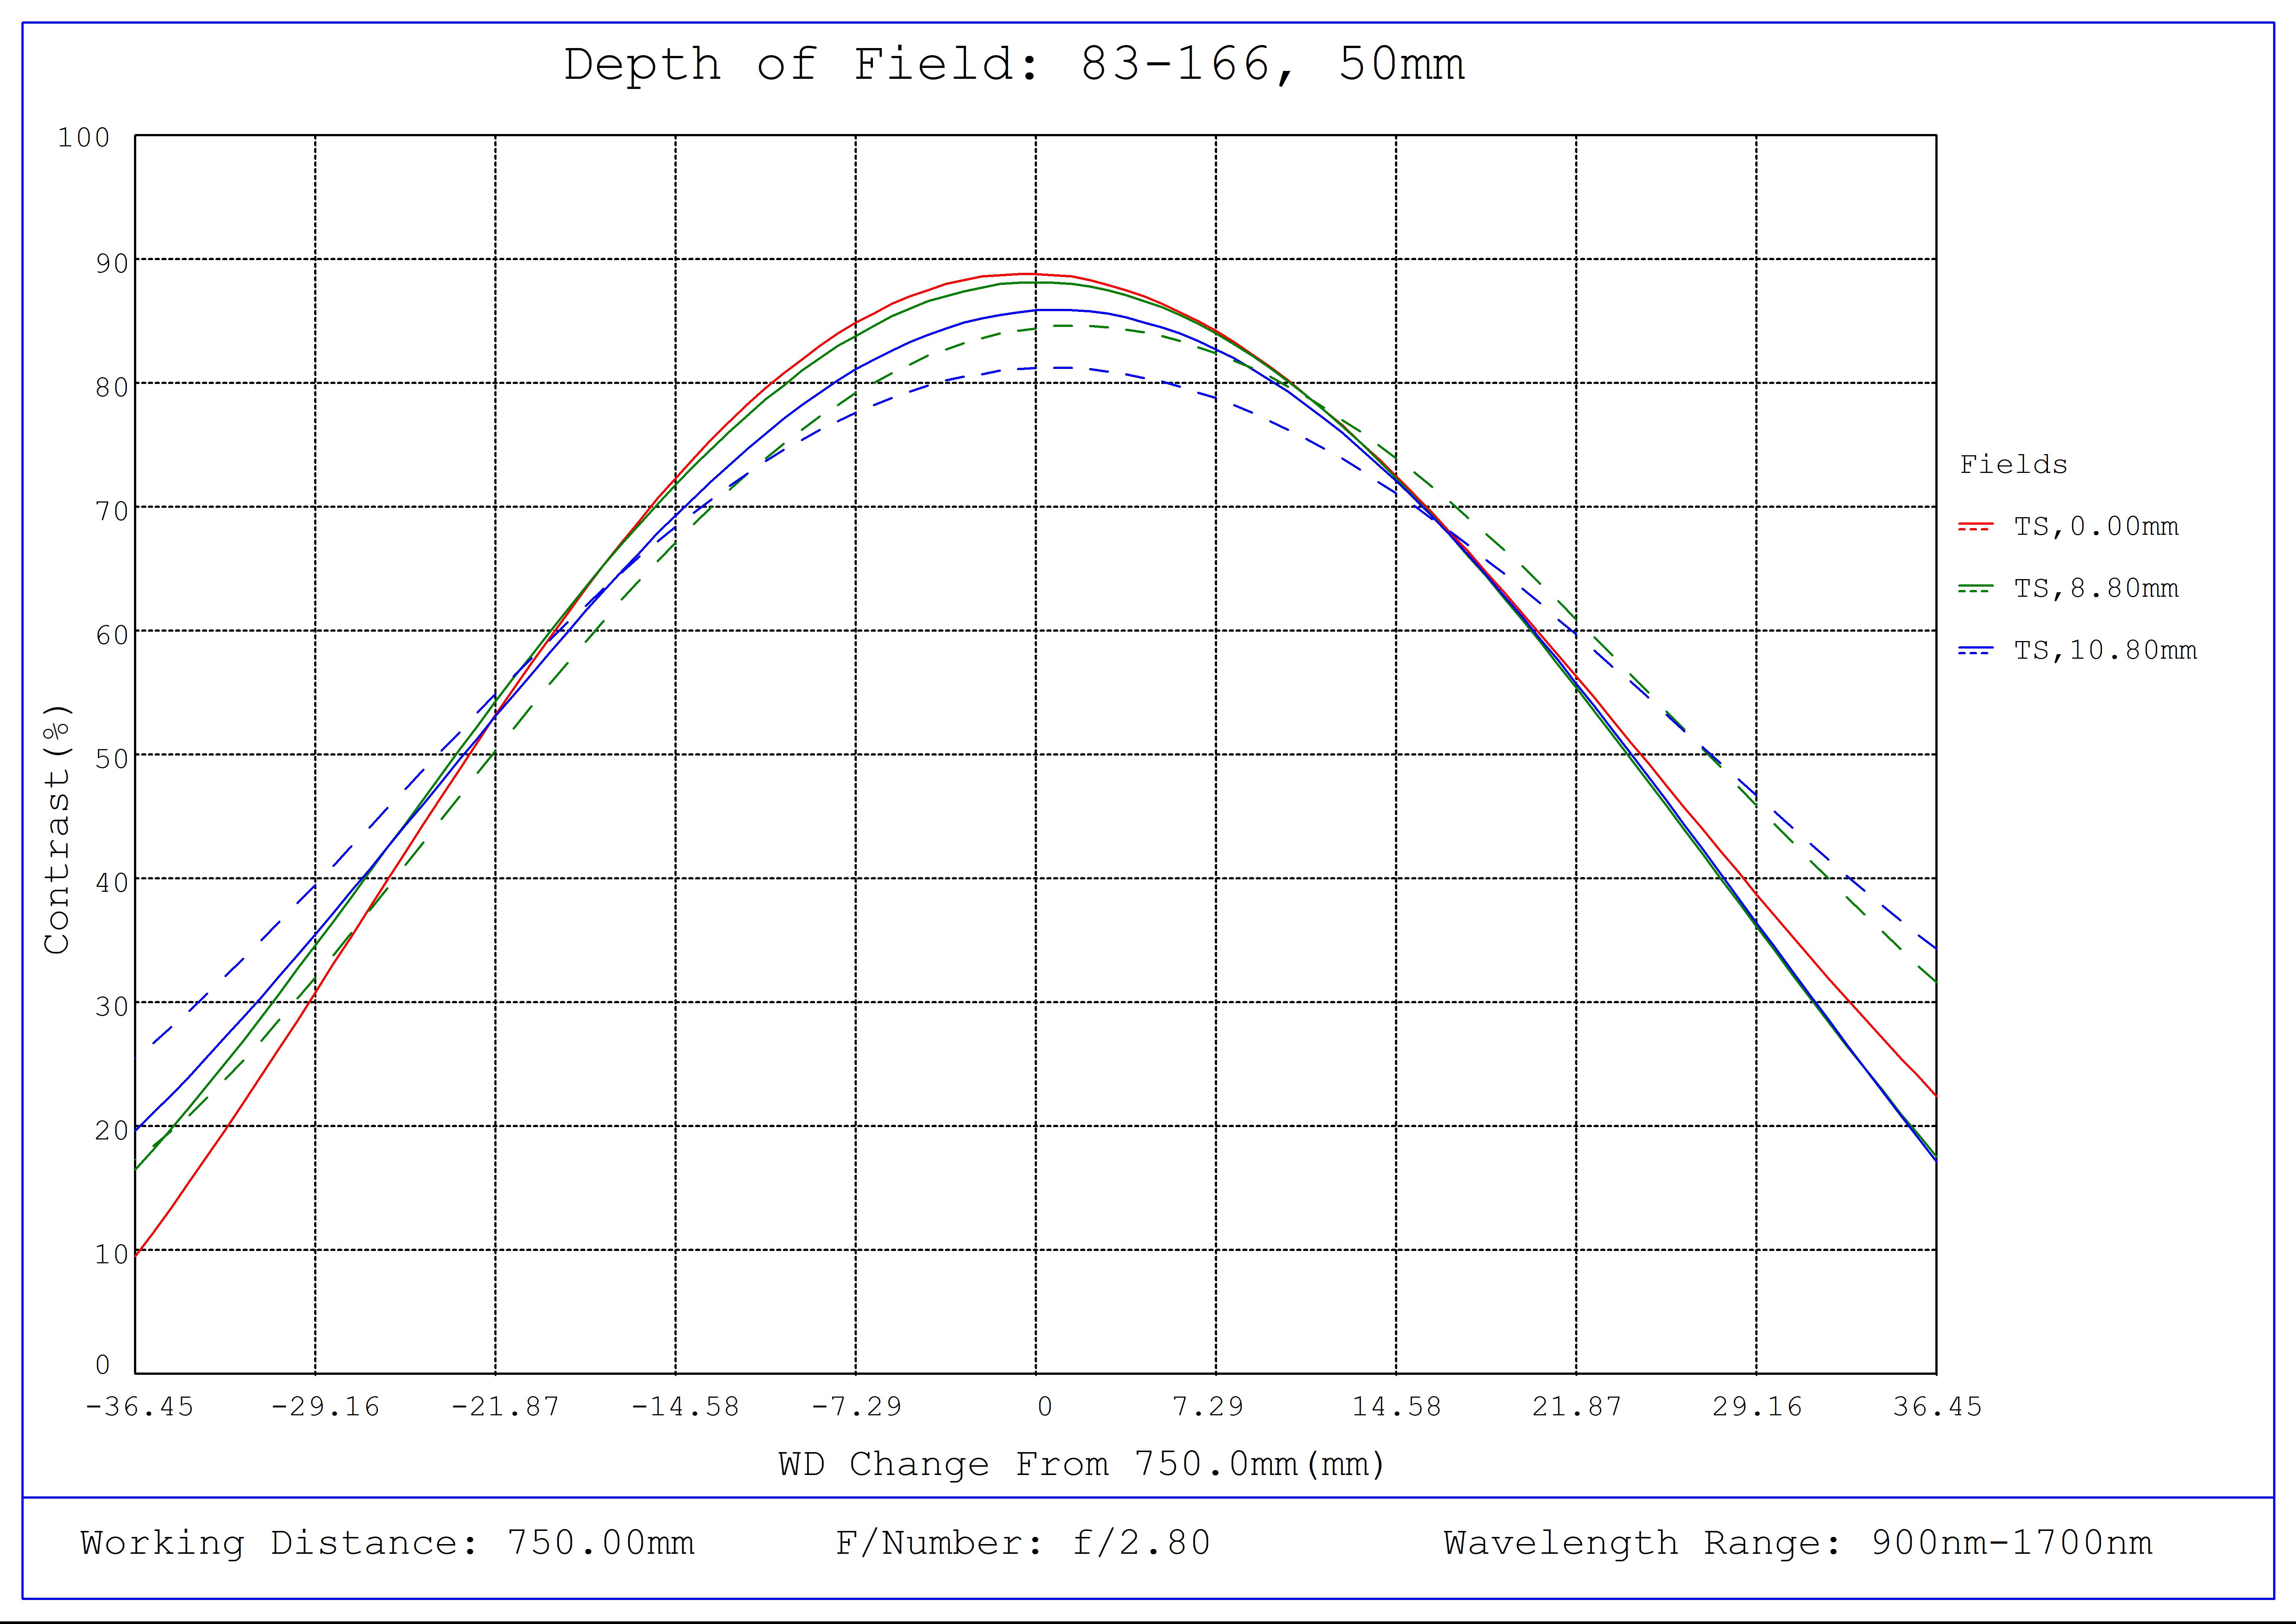 #83-166, 50mm SWIR Series Fixed Focal Length Lens, F-Mount, Depth of Field Plot, 750mm Working Distance, f2.8